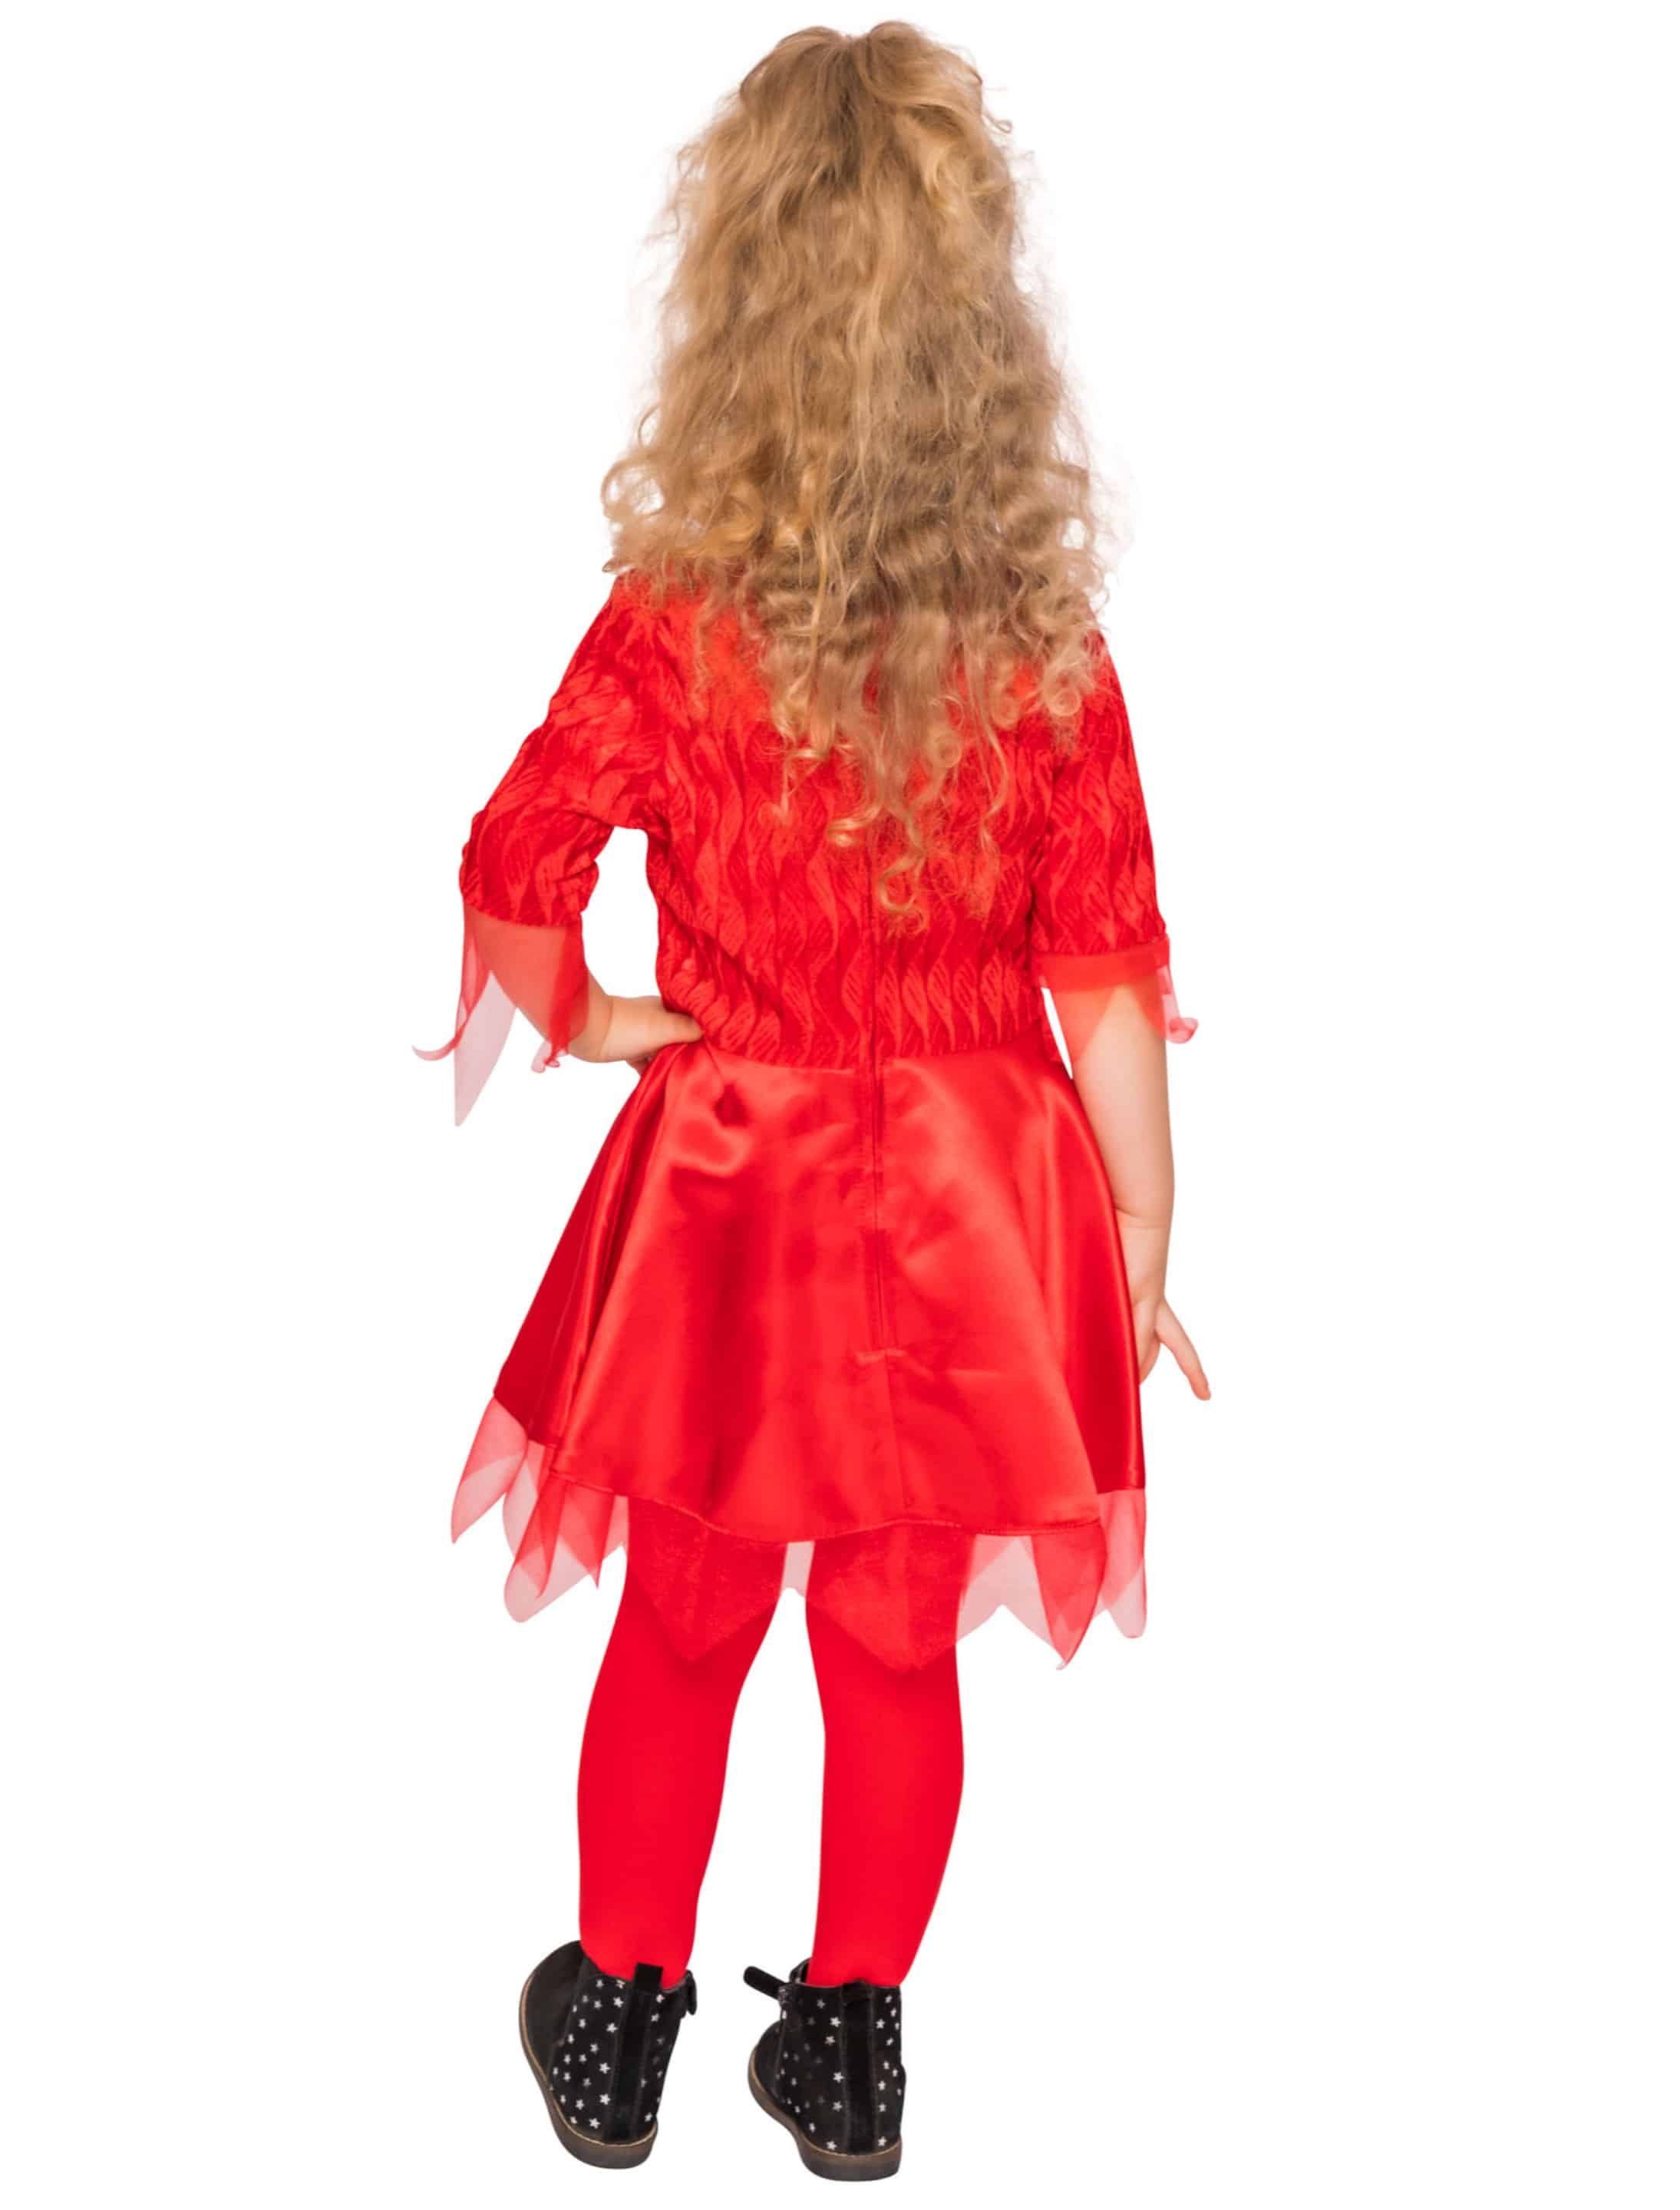 Kleid Teufel Kinder rot 104